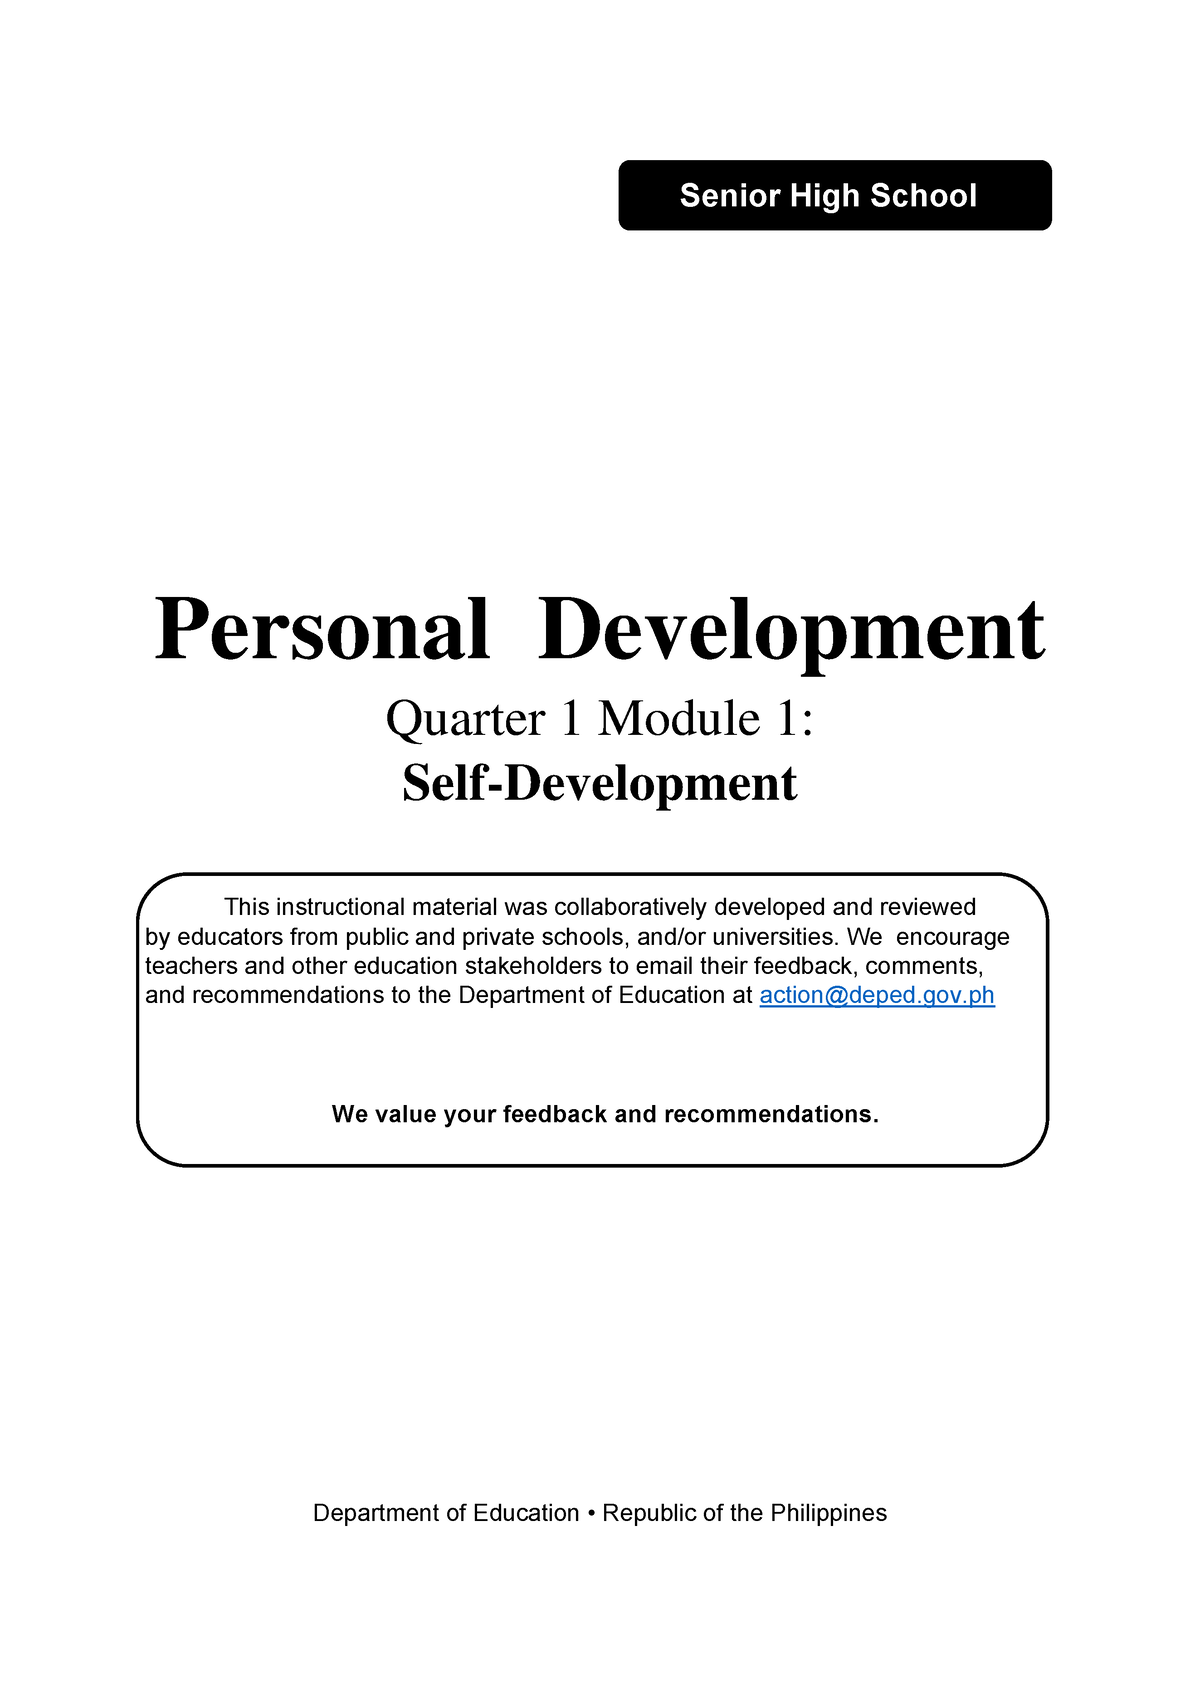 Personal Development Quarter 2 Module 3 Grade 11 Senior High School Personal Development 7254